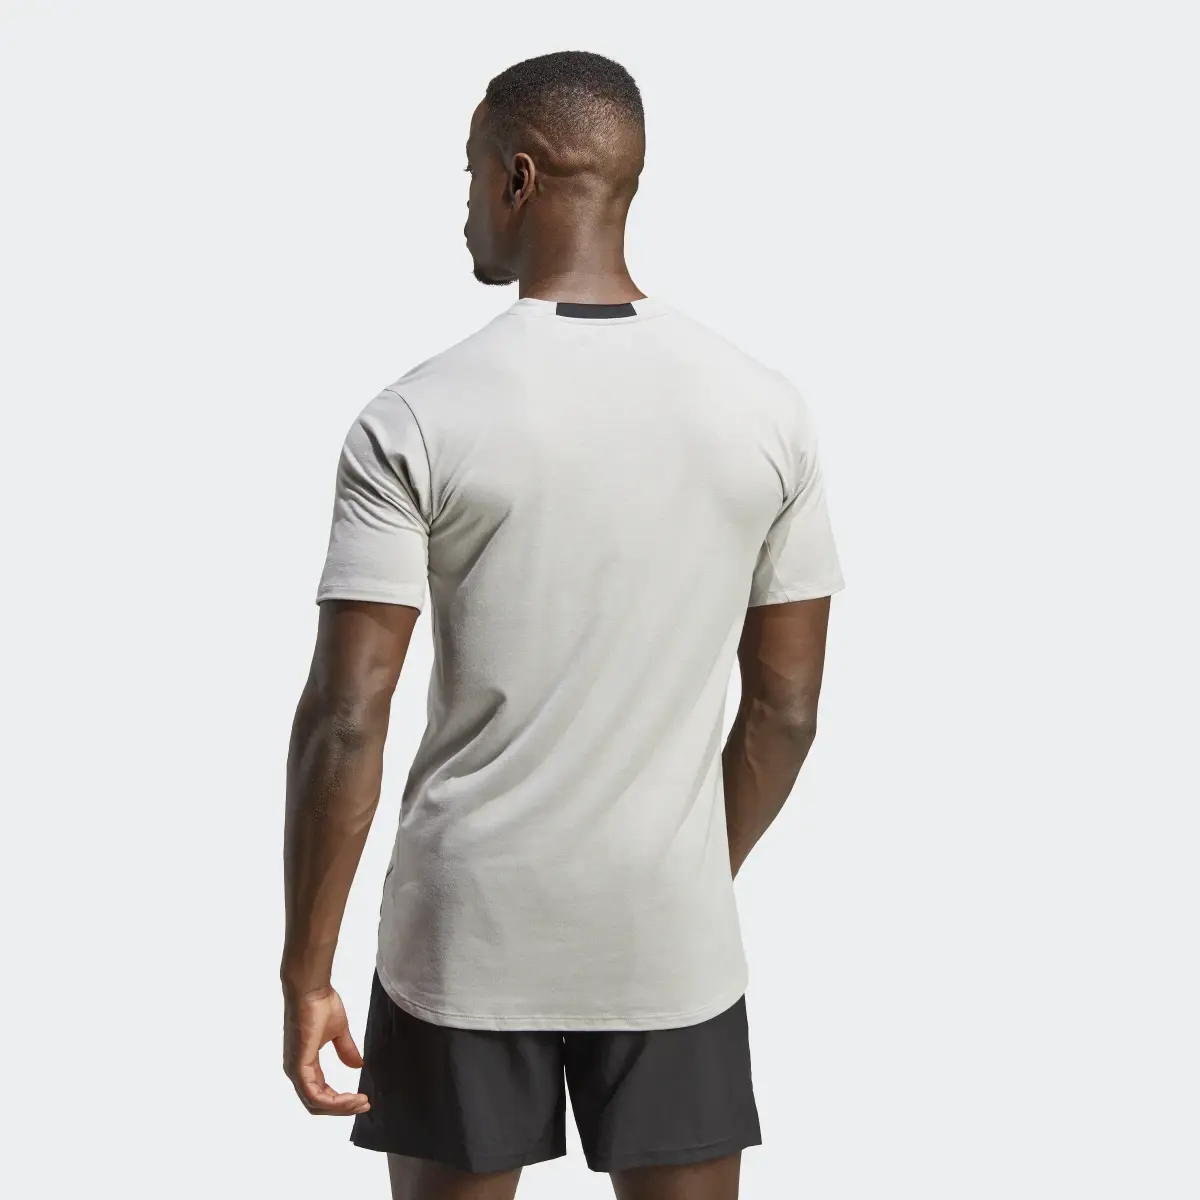 Adidas Designed for Training T-Shirt. 3